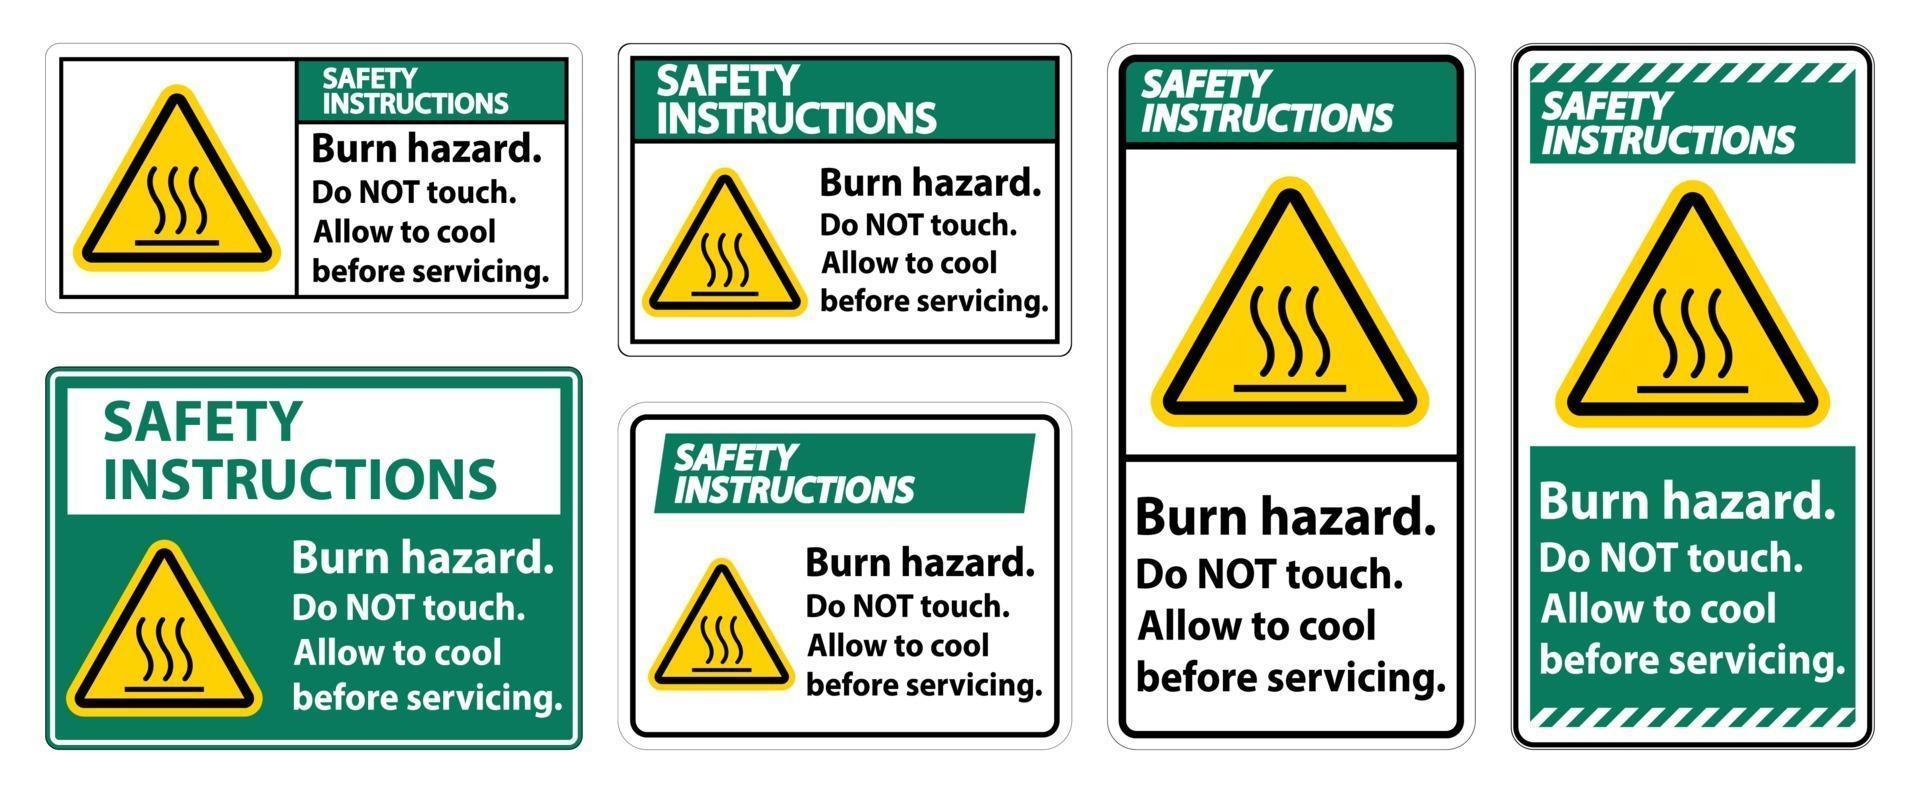 Safety Instructions Burn hazard safety sign set vector